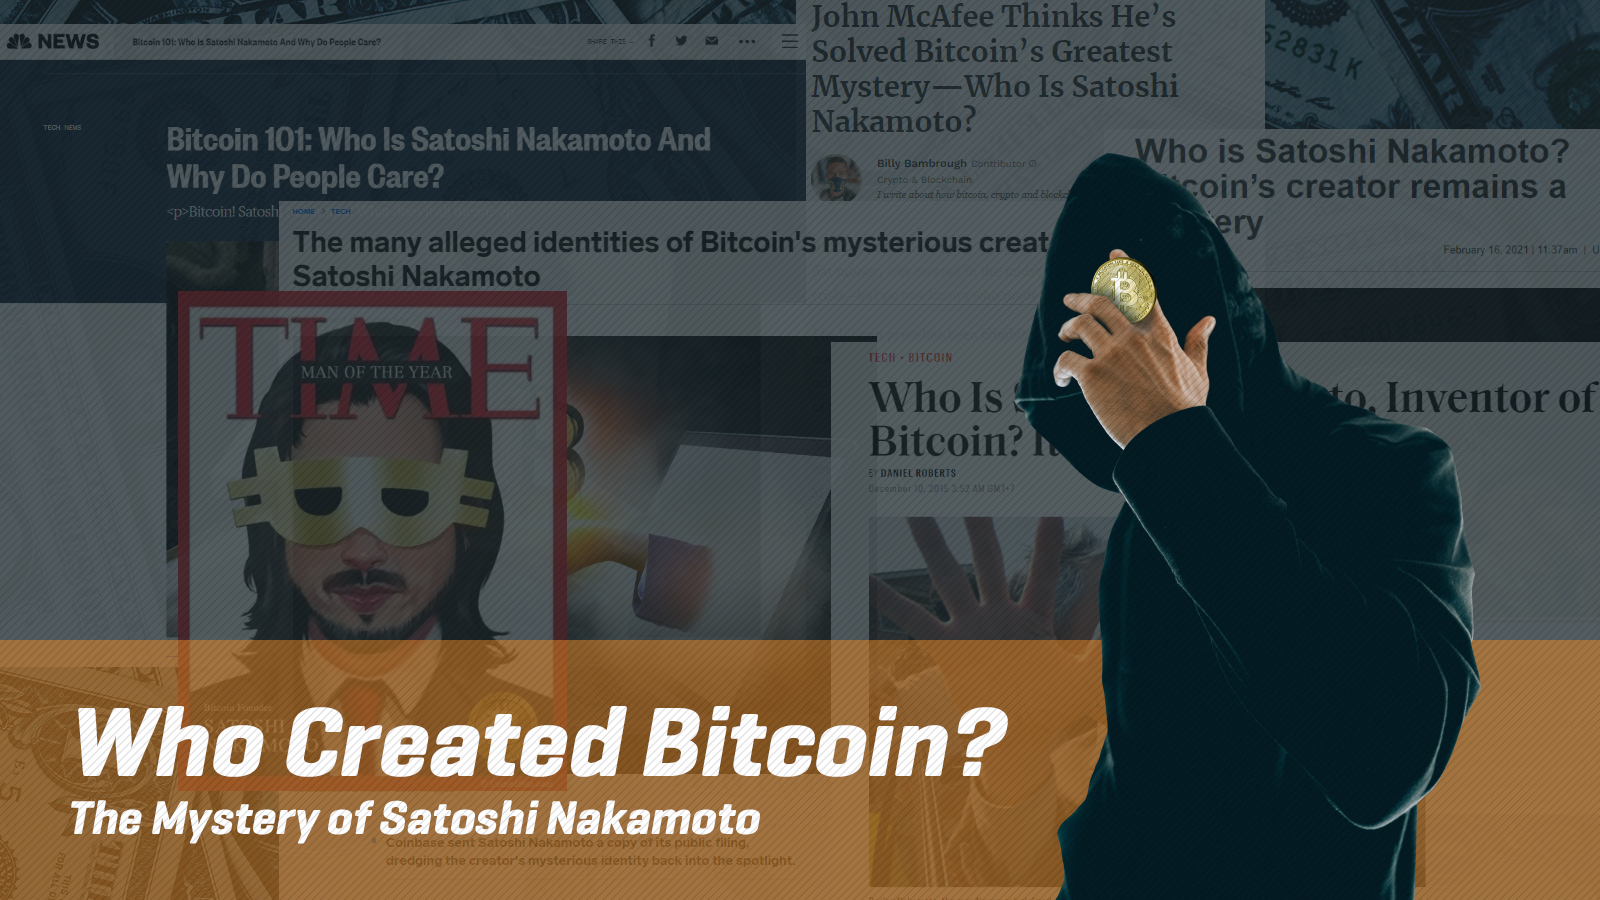 who developed bitcoin